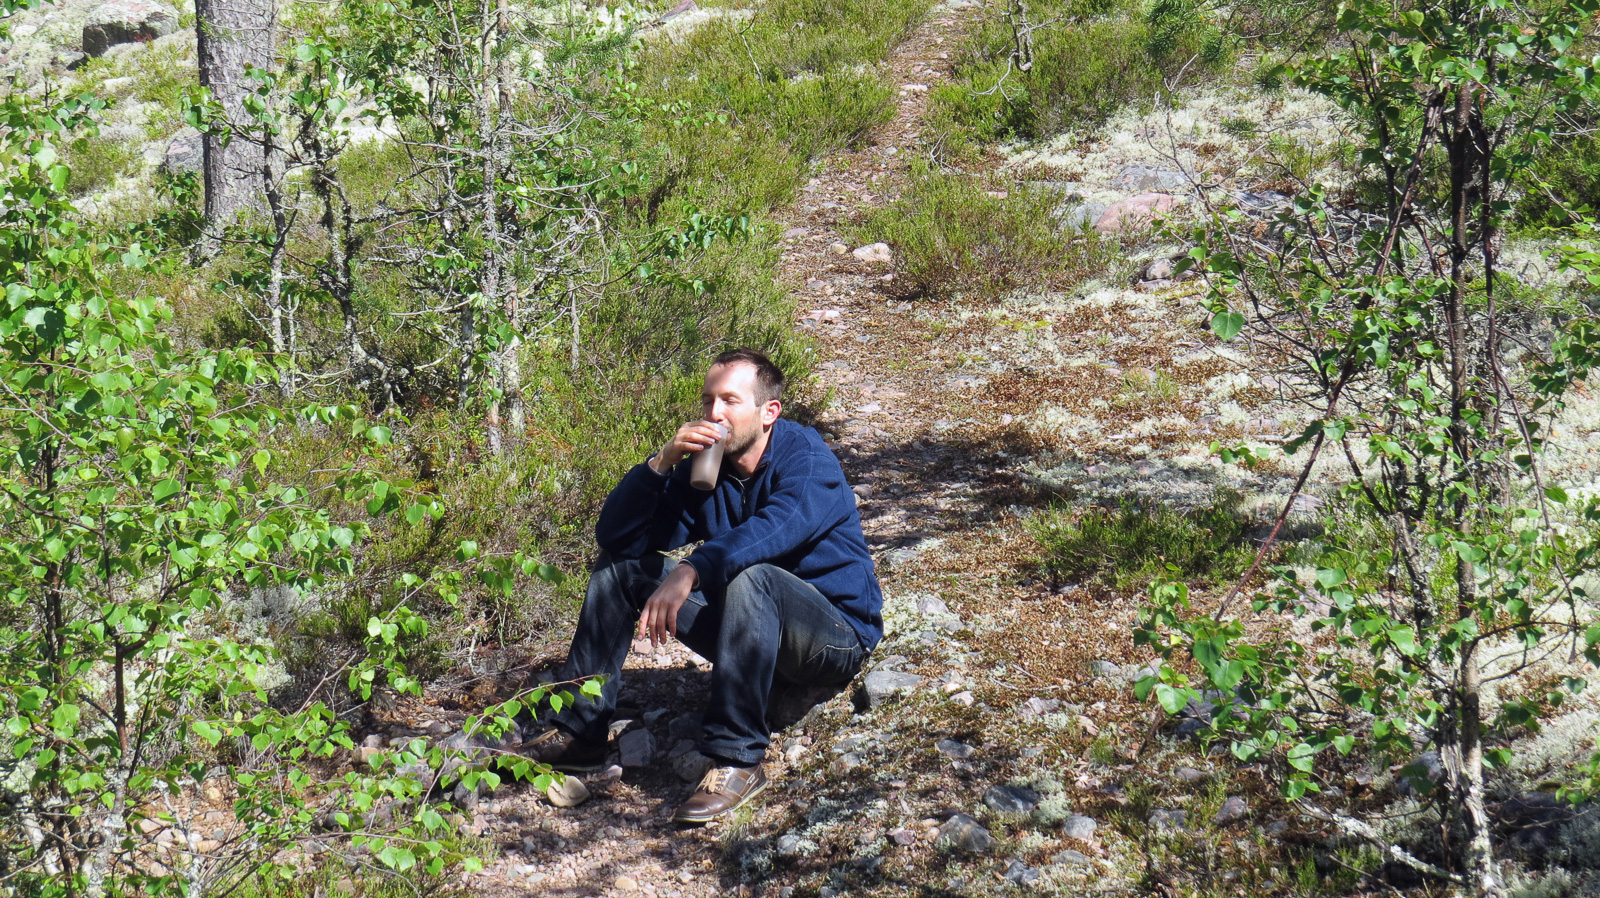 Schweden - Wilderness route [16.164 mm, 1/320 sec at f / 5.0, ISO 100]